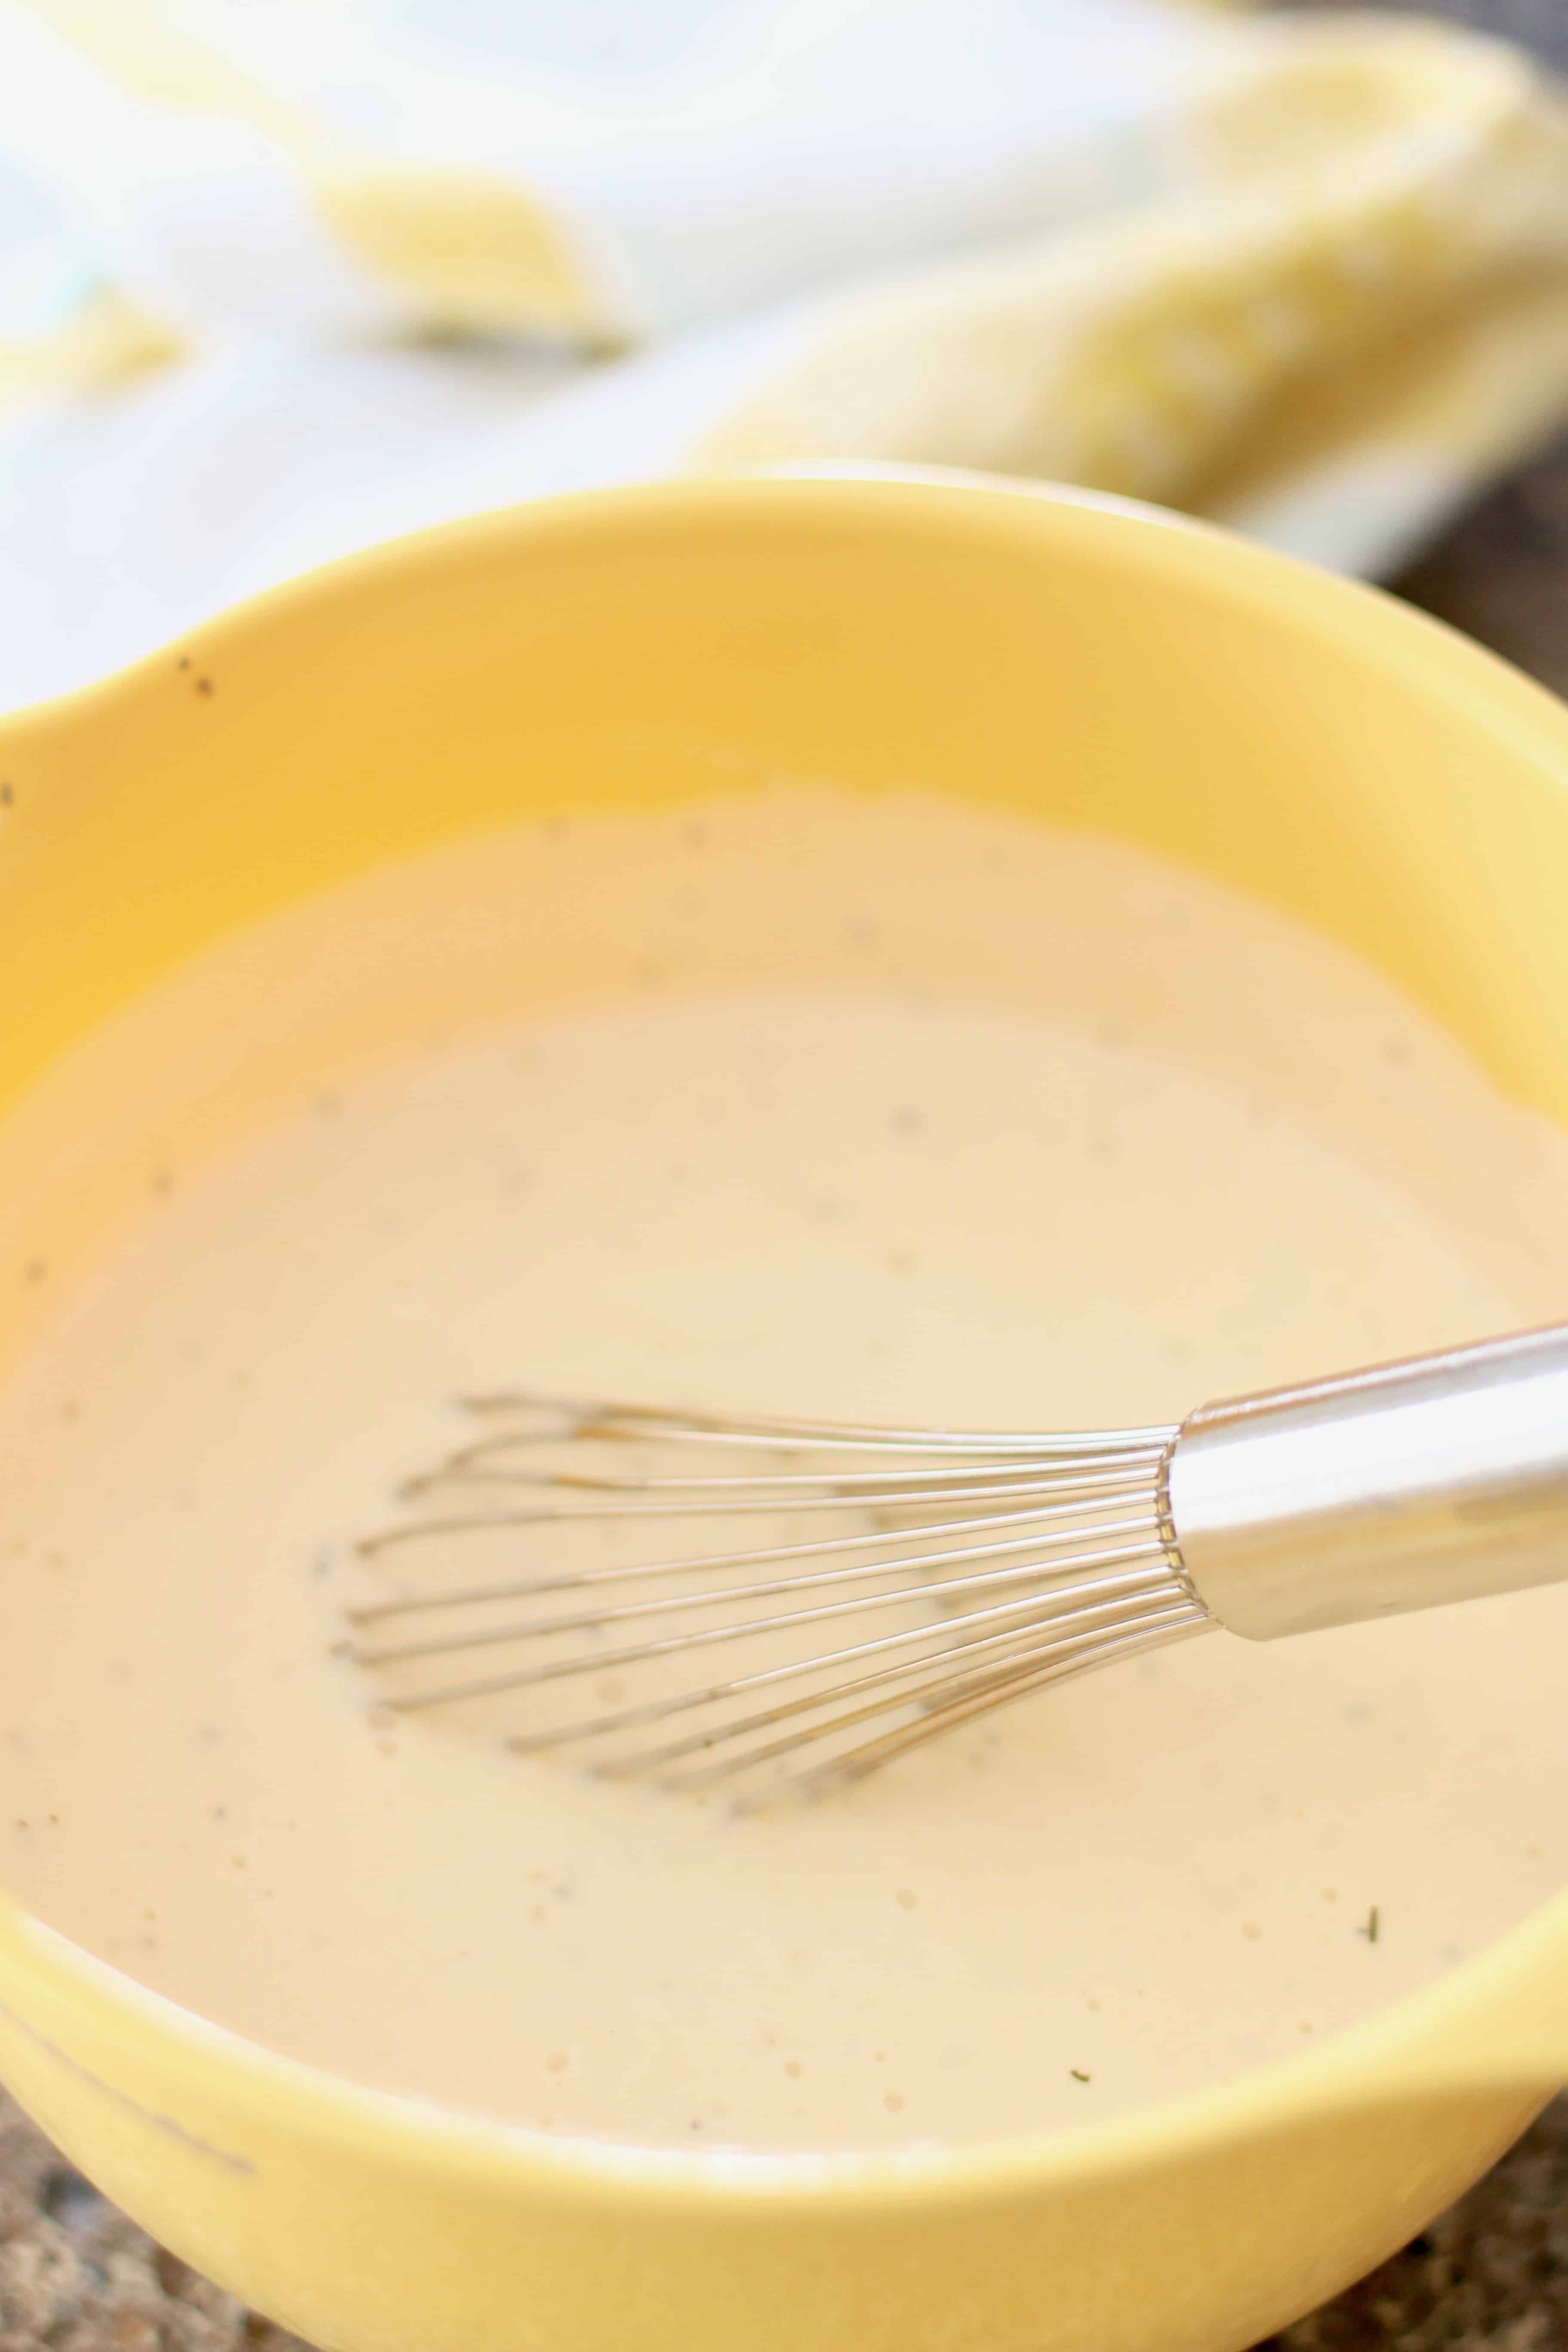 Alfredo sauce, water, garlic, Italian seasoning in a yellow bowl